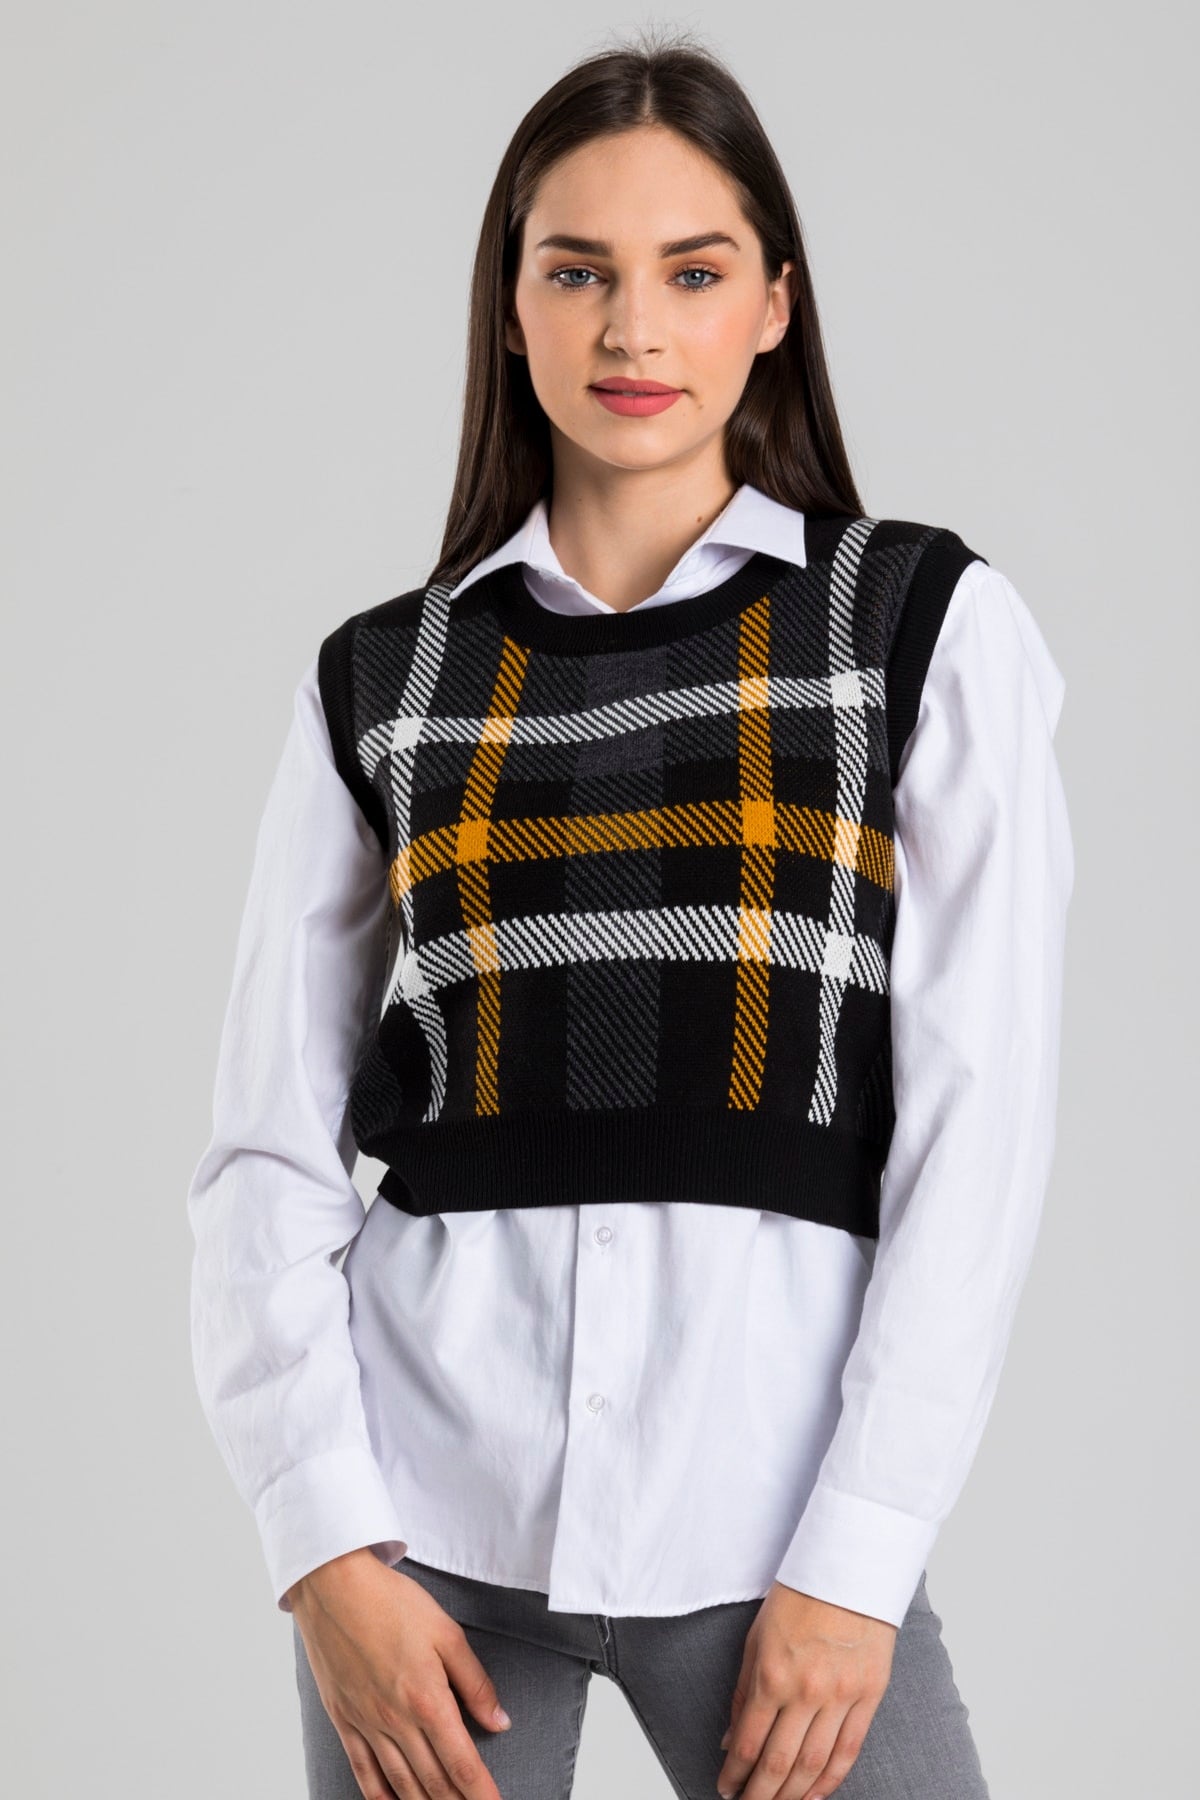 MUQKO Women Black Plaid Pattern Crew Neck Knitwear Sweater Women’s Dress Toppies New Fashion Autumn Winter 2020 Casual